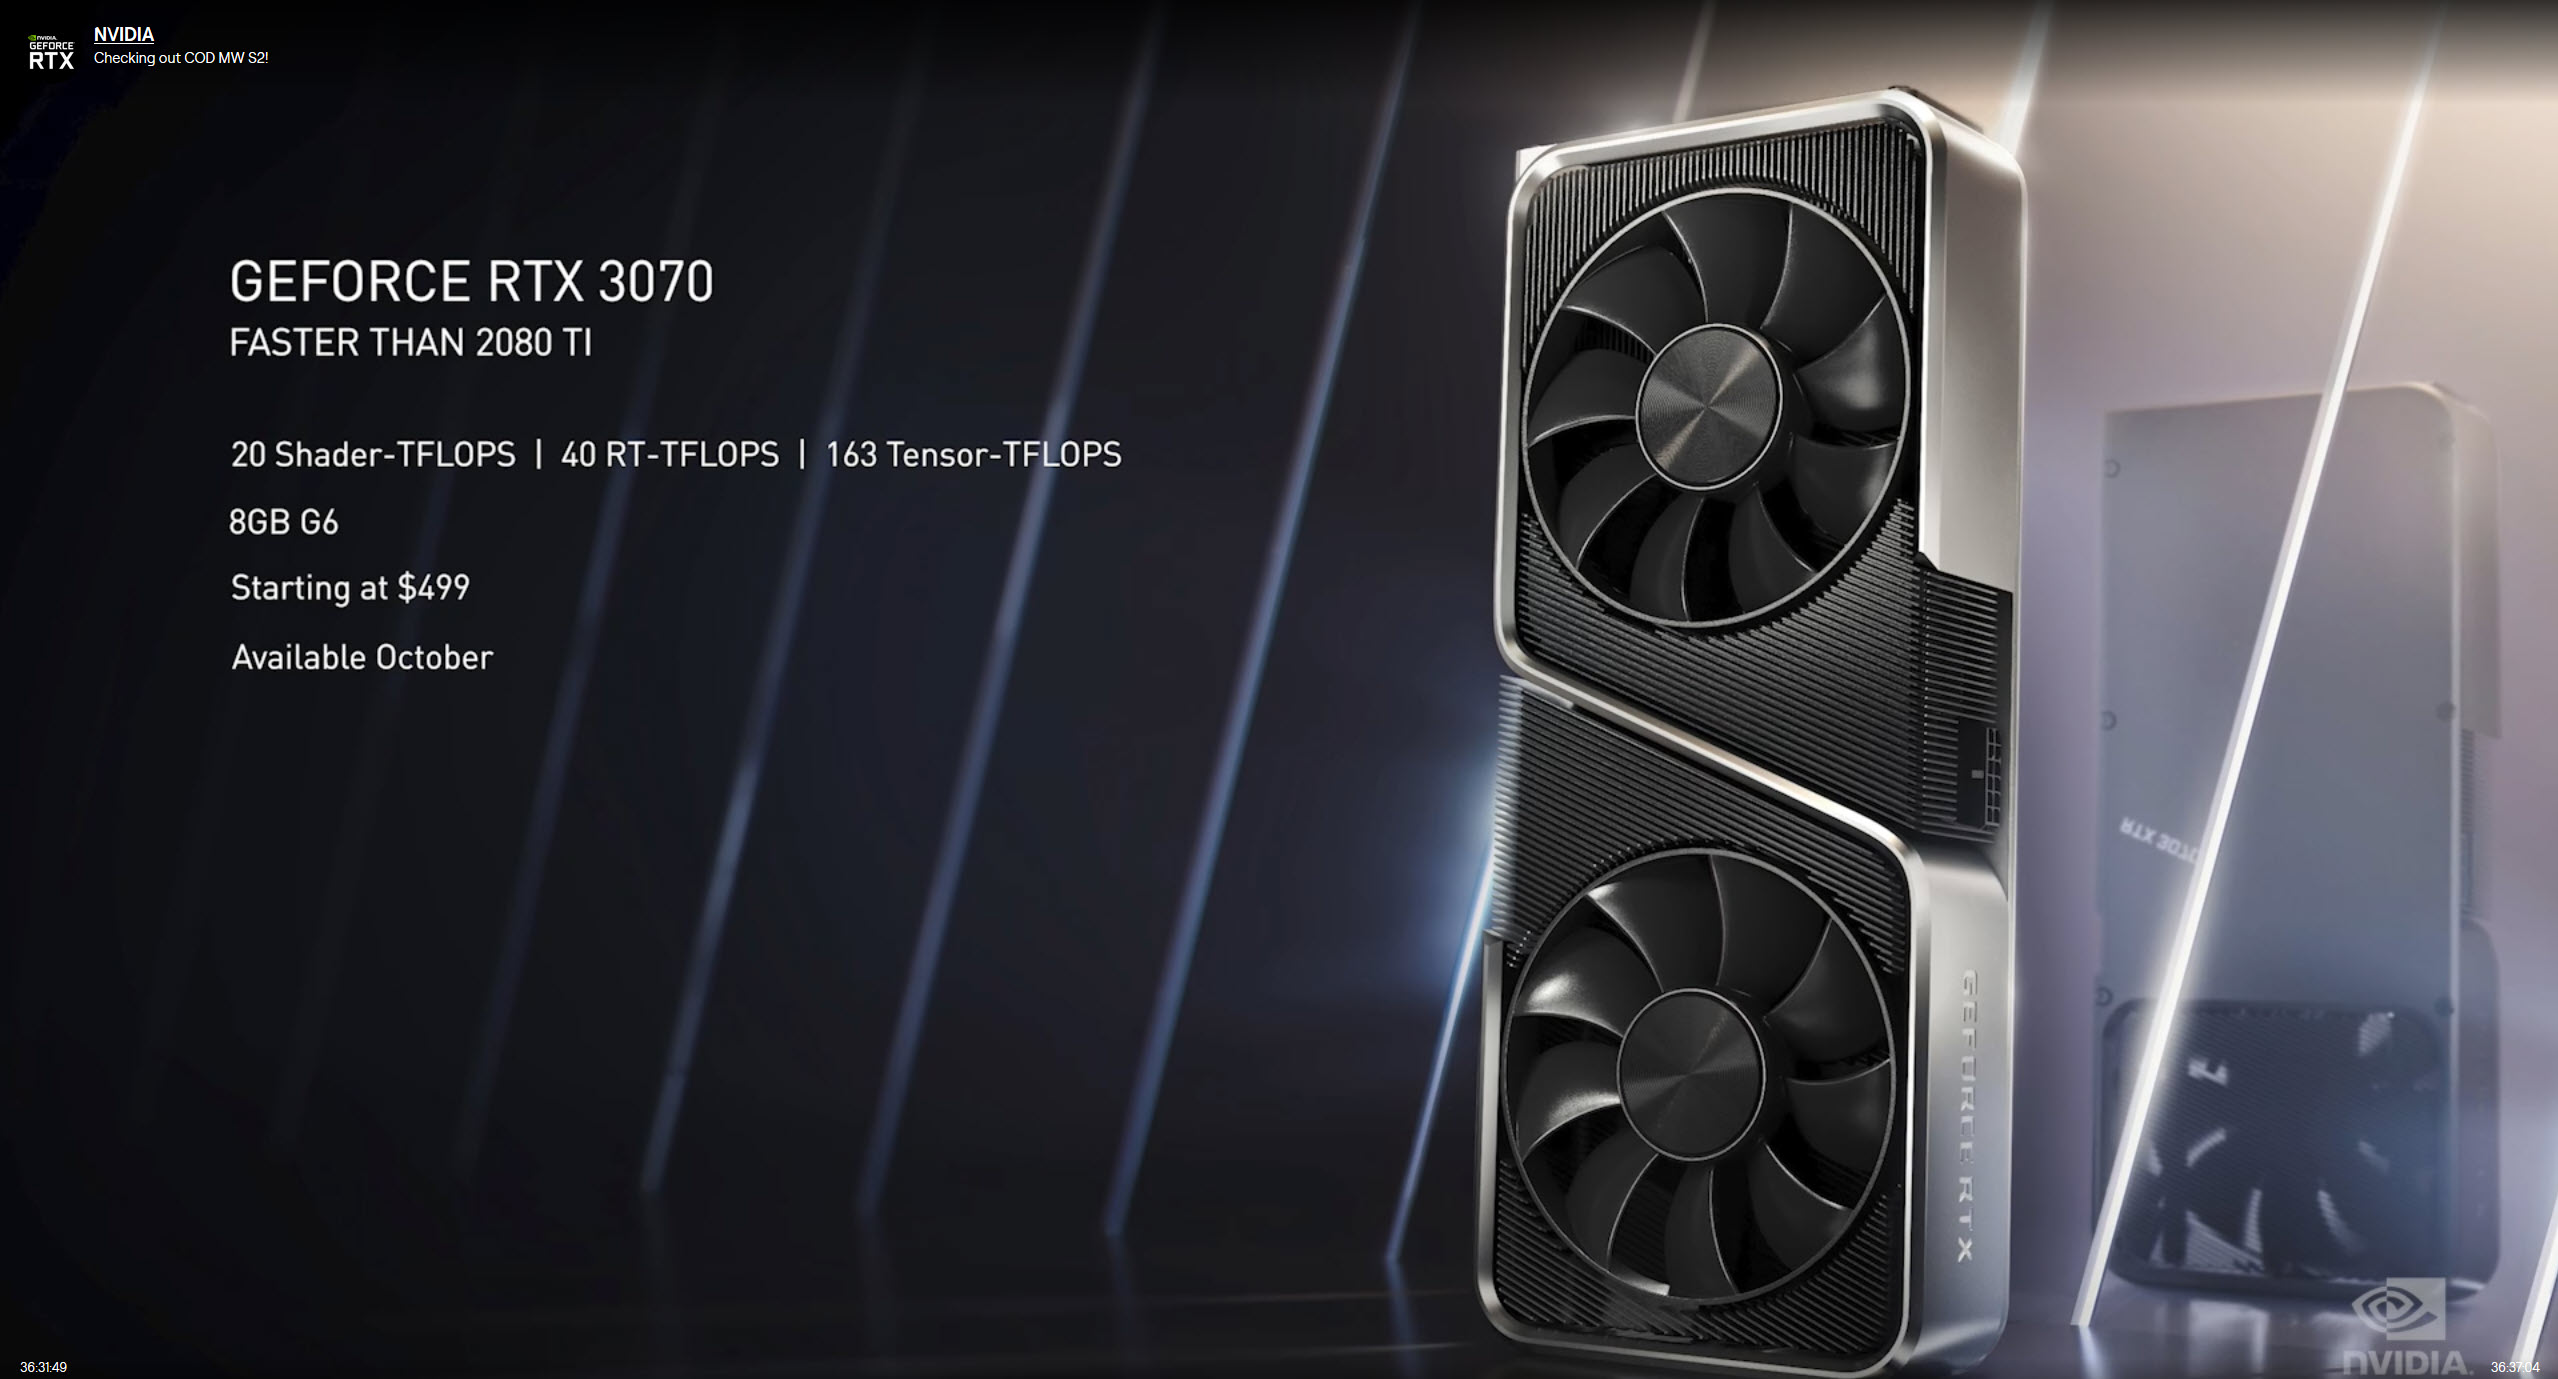 2020 09 01 23 46 06 Nvidia ประกาศเปิดตัวการ์ดจอ Nvidia GeForce RTX 30ซีรี่ย์รุ่นใหม่ล่าสุดสถาปัตย์ Ampere อย่างเป็นทางการ 